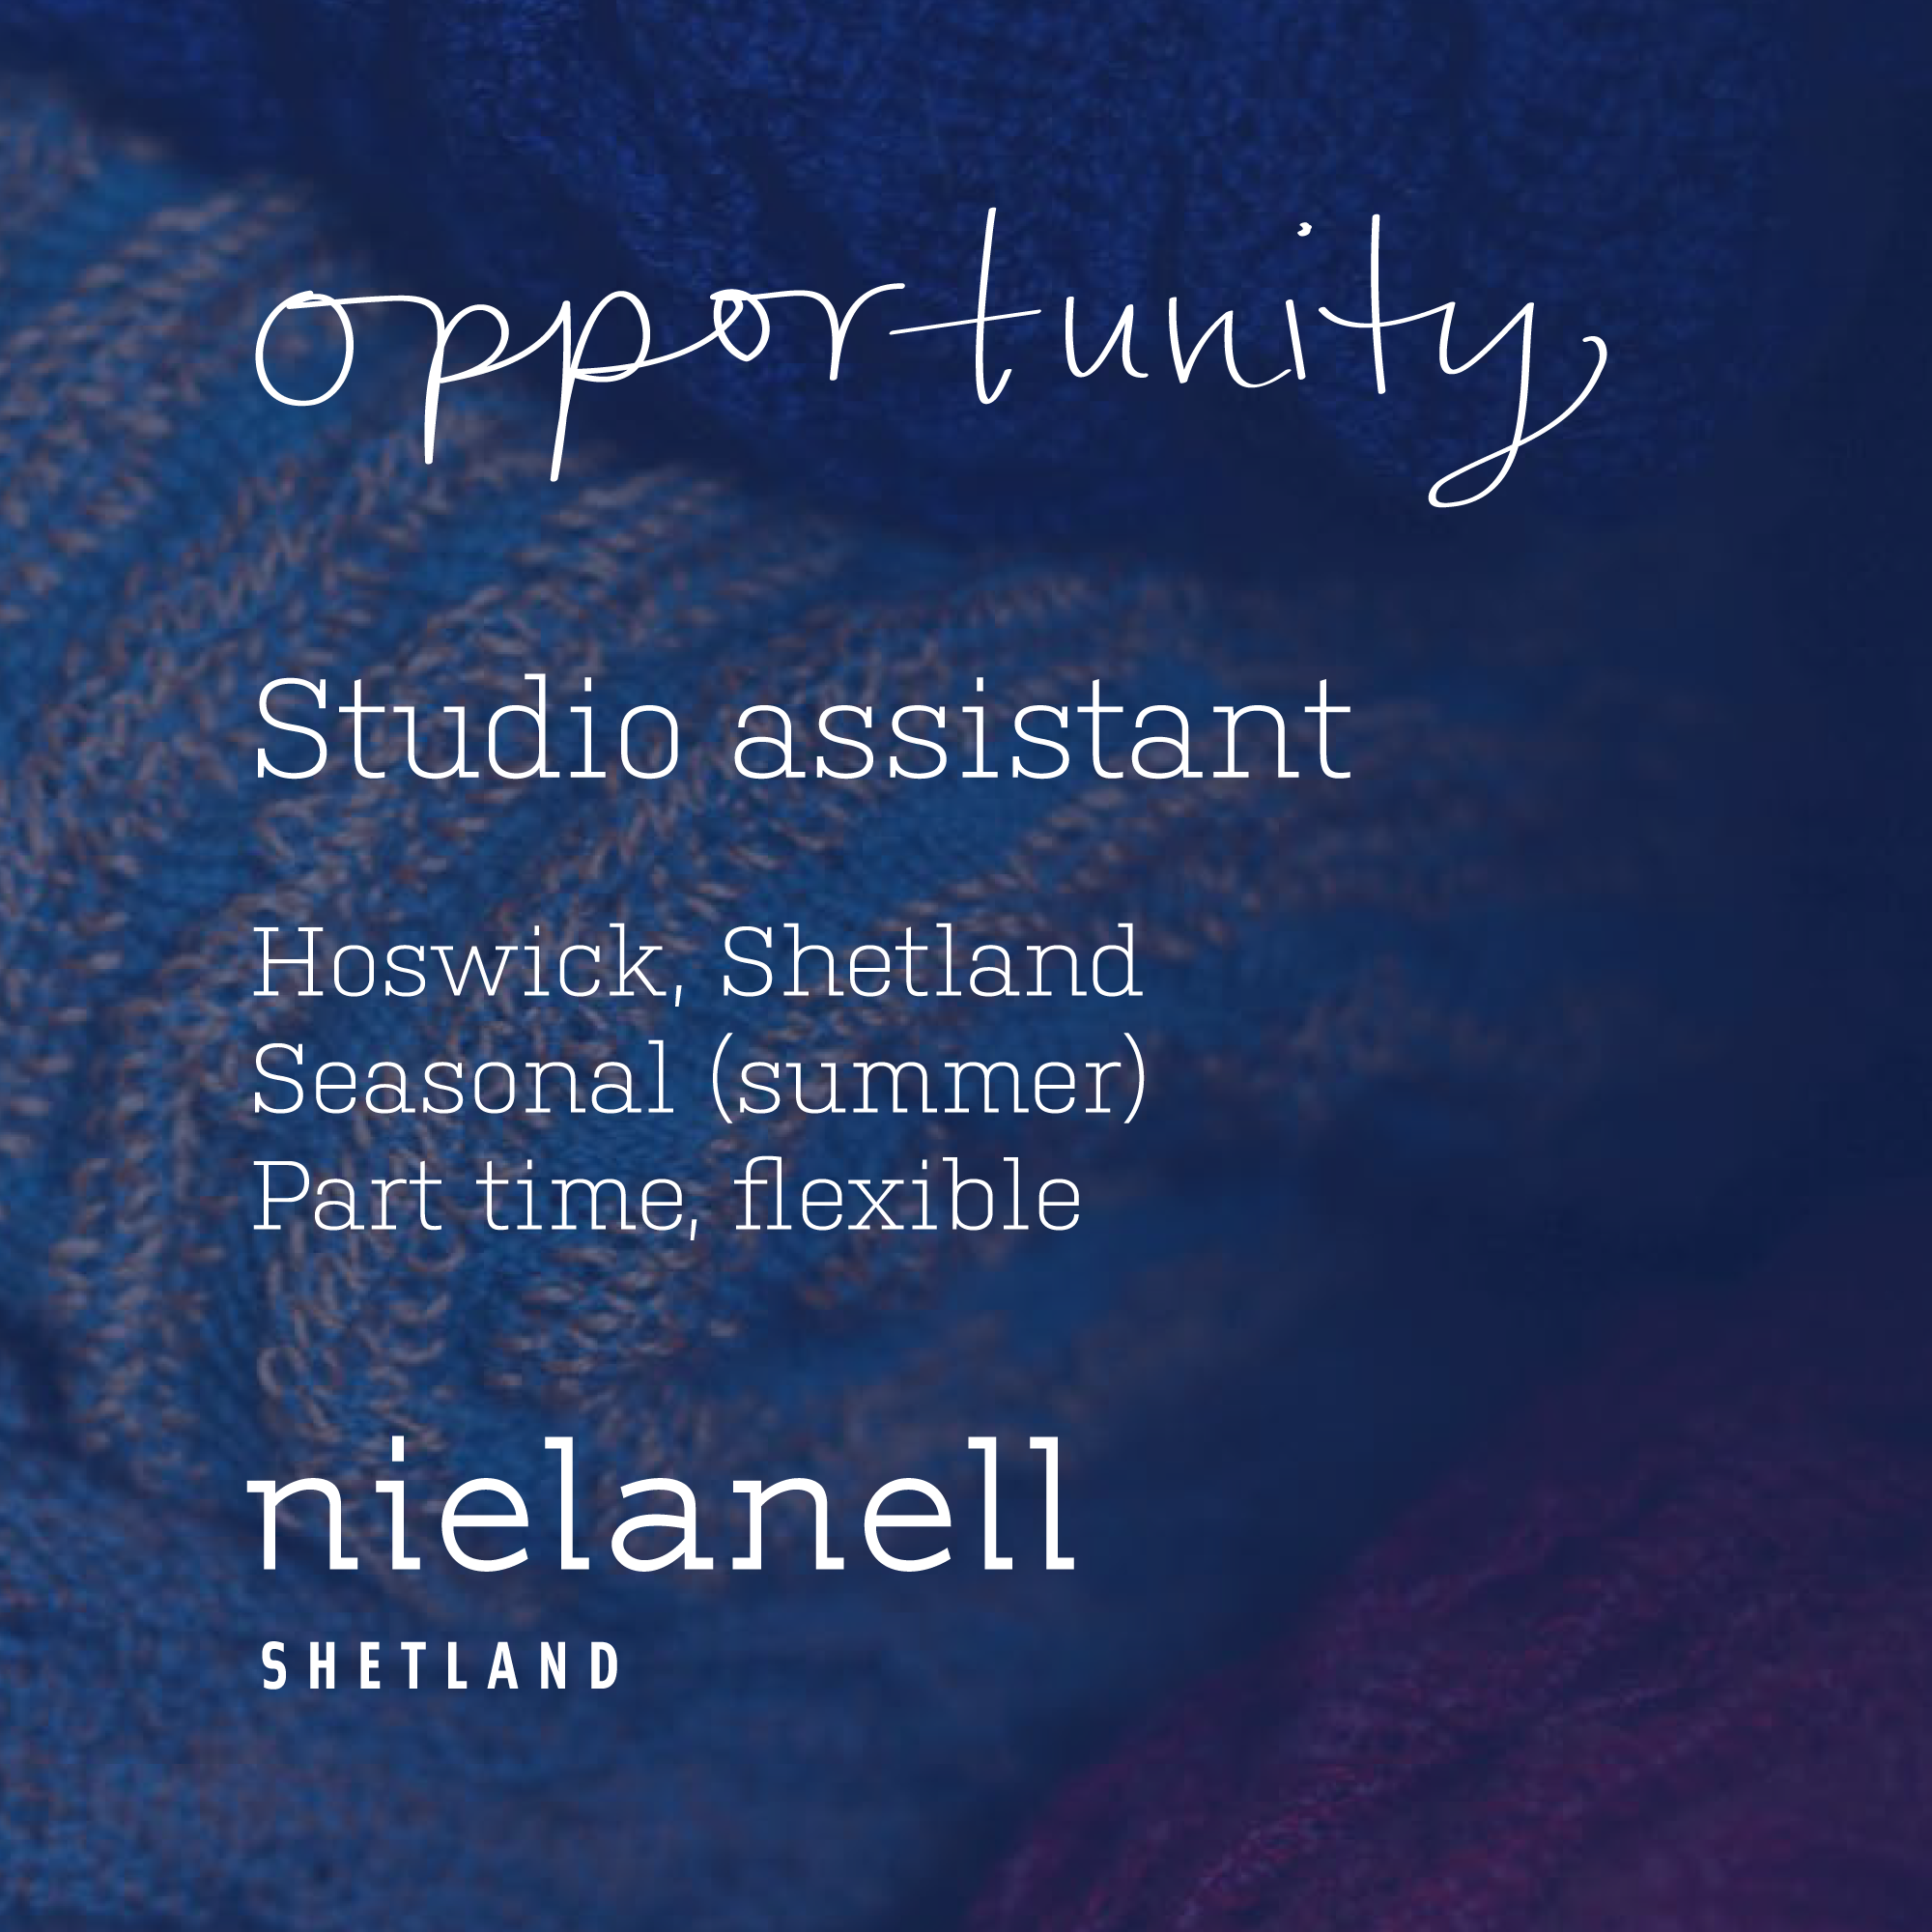 Opportunity: Studio Assistant. Hoswick, Shetland, Part-time, flexible. Seasonal (summer). Nielanell Shetland